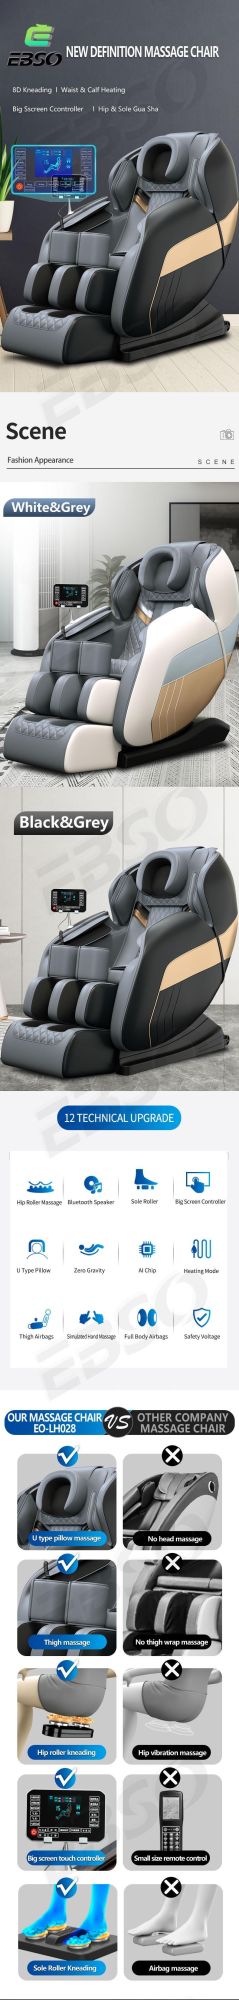 Belove Electric Intelligent Luxury Zero Gravity 3D Massage Chair Full Body Al Multifunctional Armchair SL Track